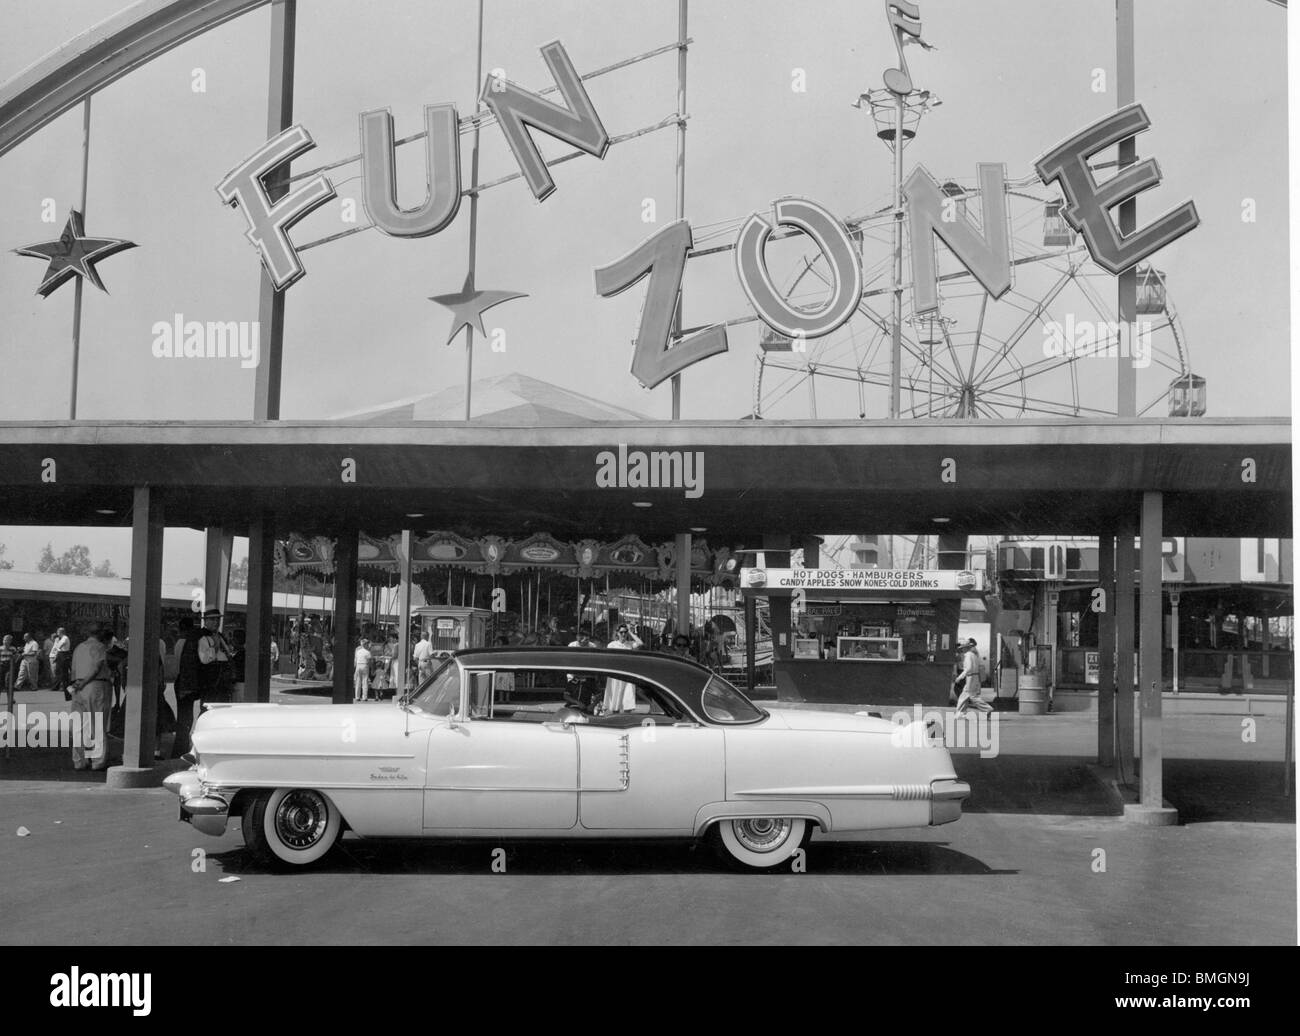 1956 Cadillac Sedan De Ville in California Foto Stock